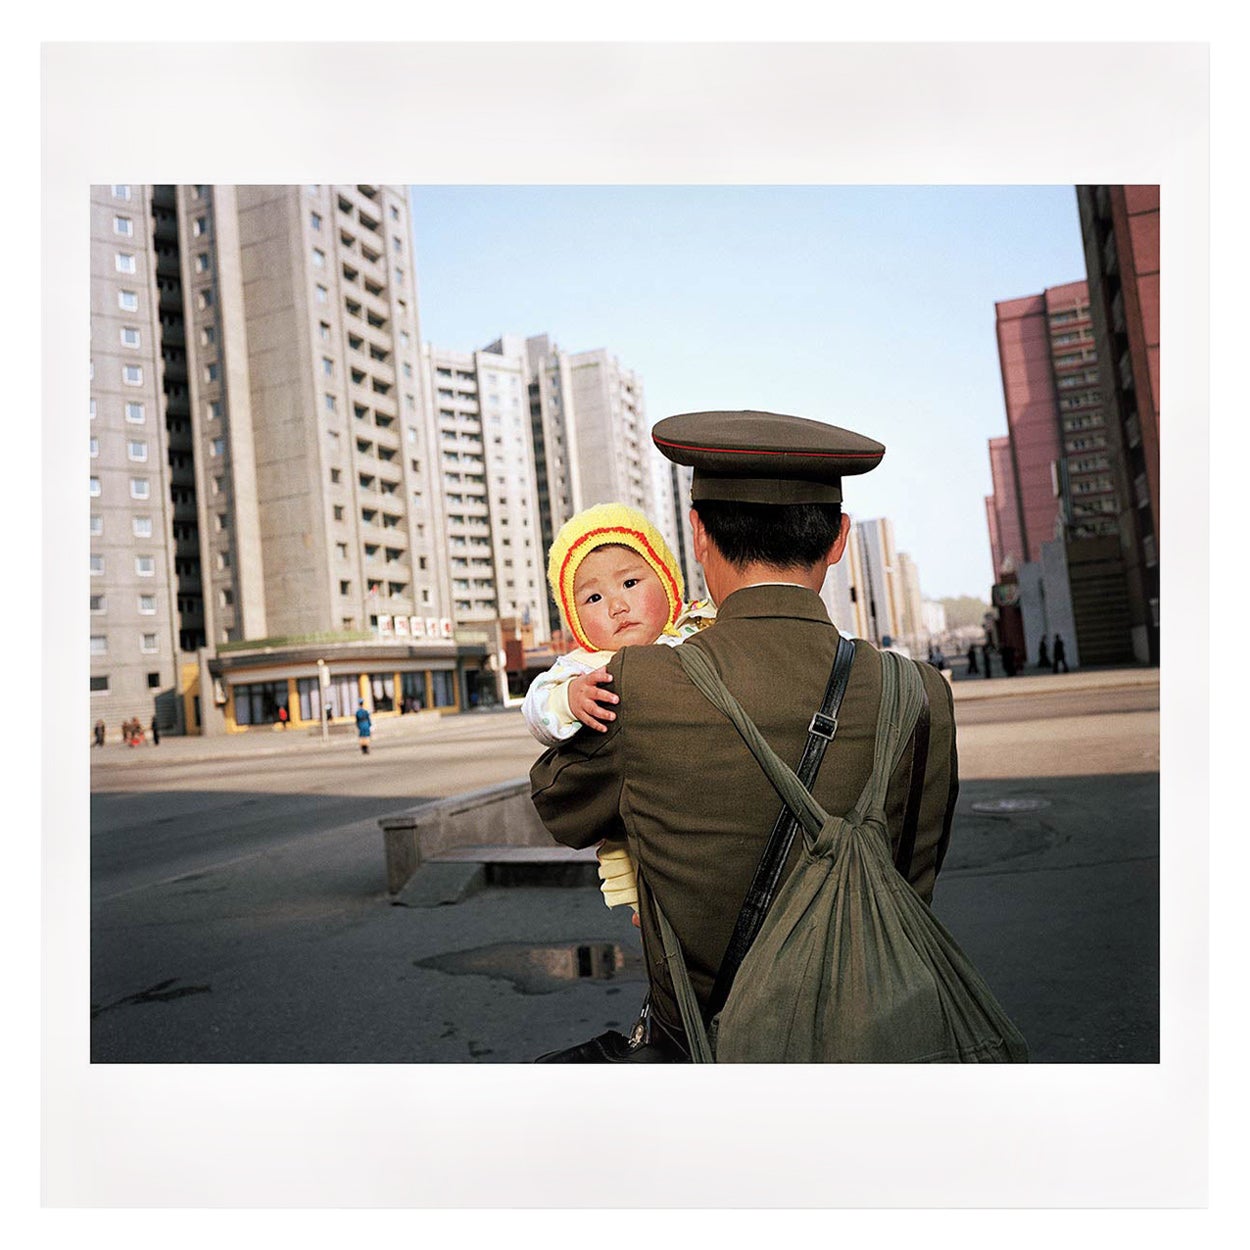 Signed Martin Parr "Pyongyang, North Korea" Magnum Print, 1997